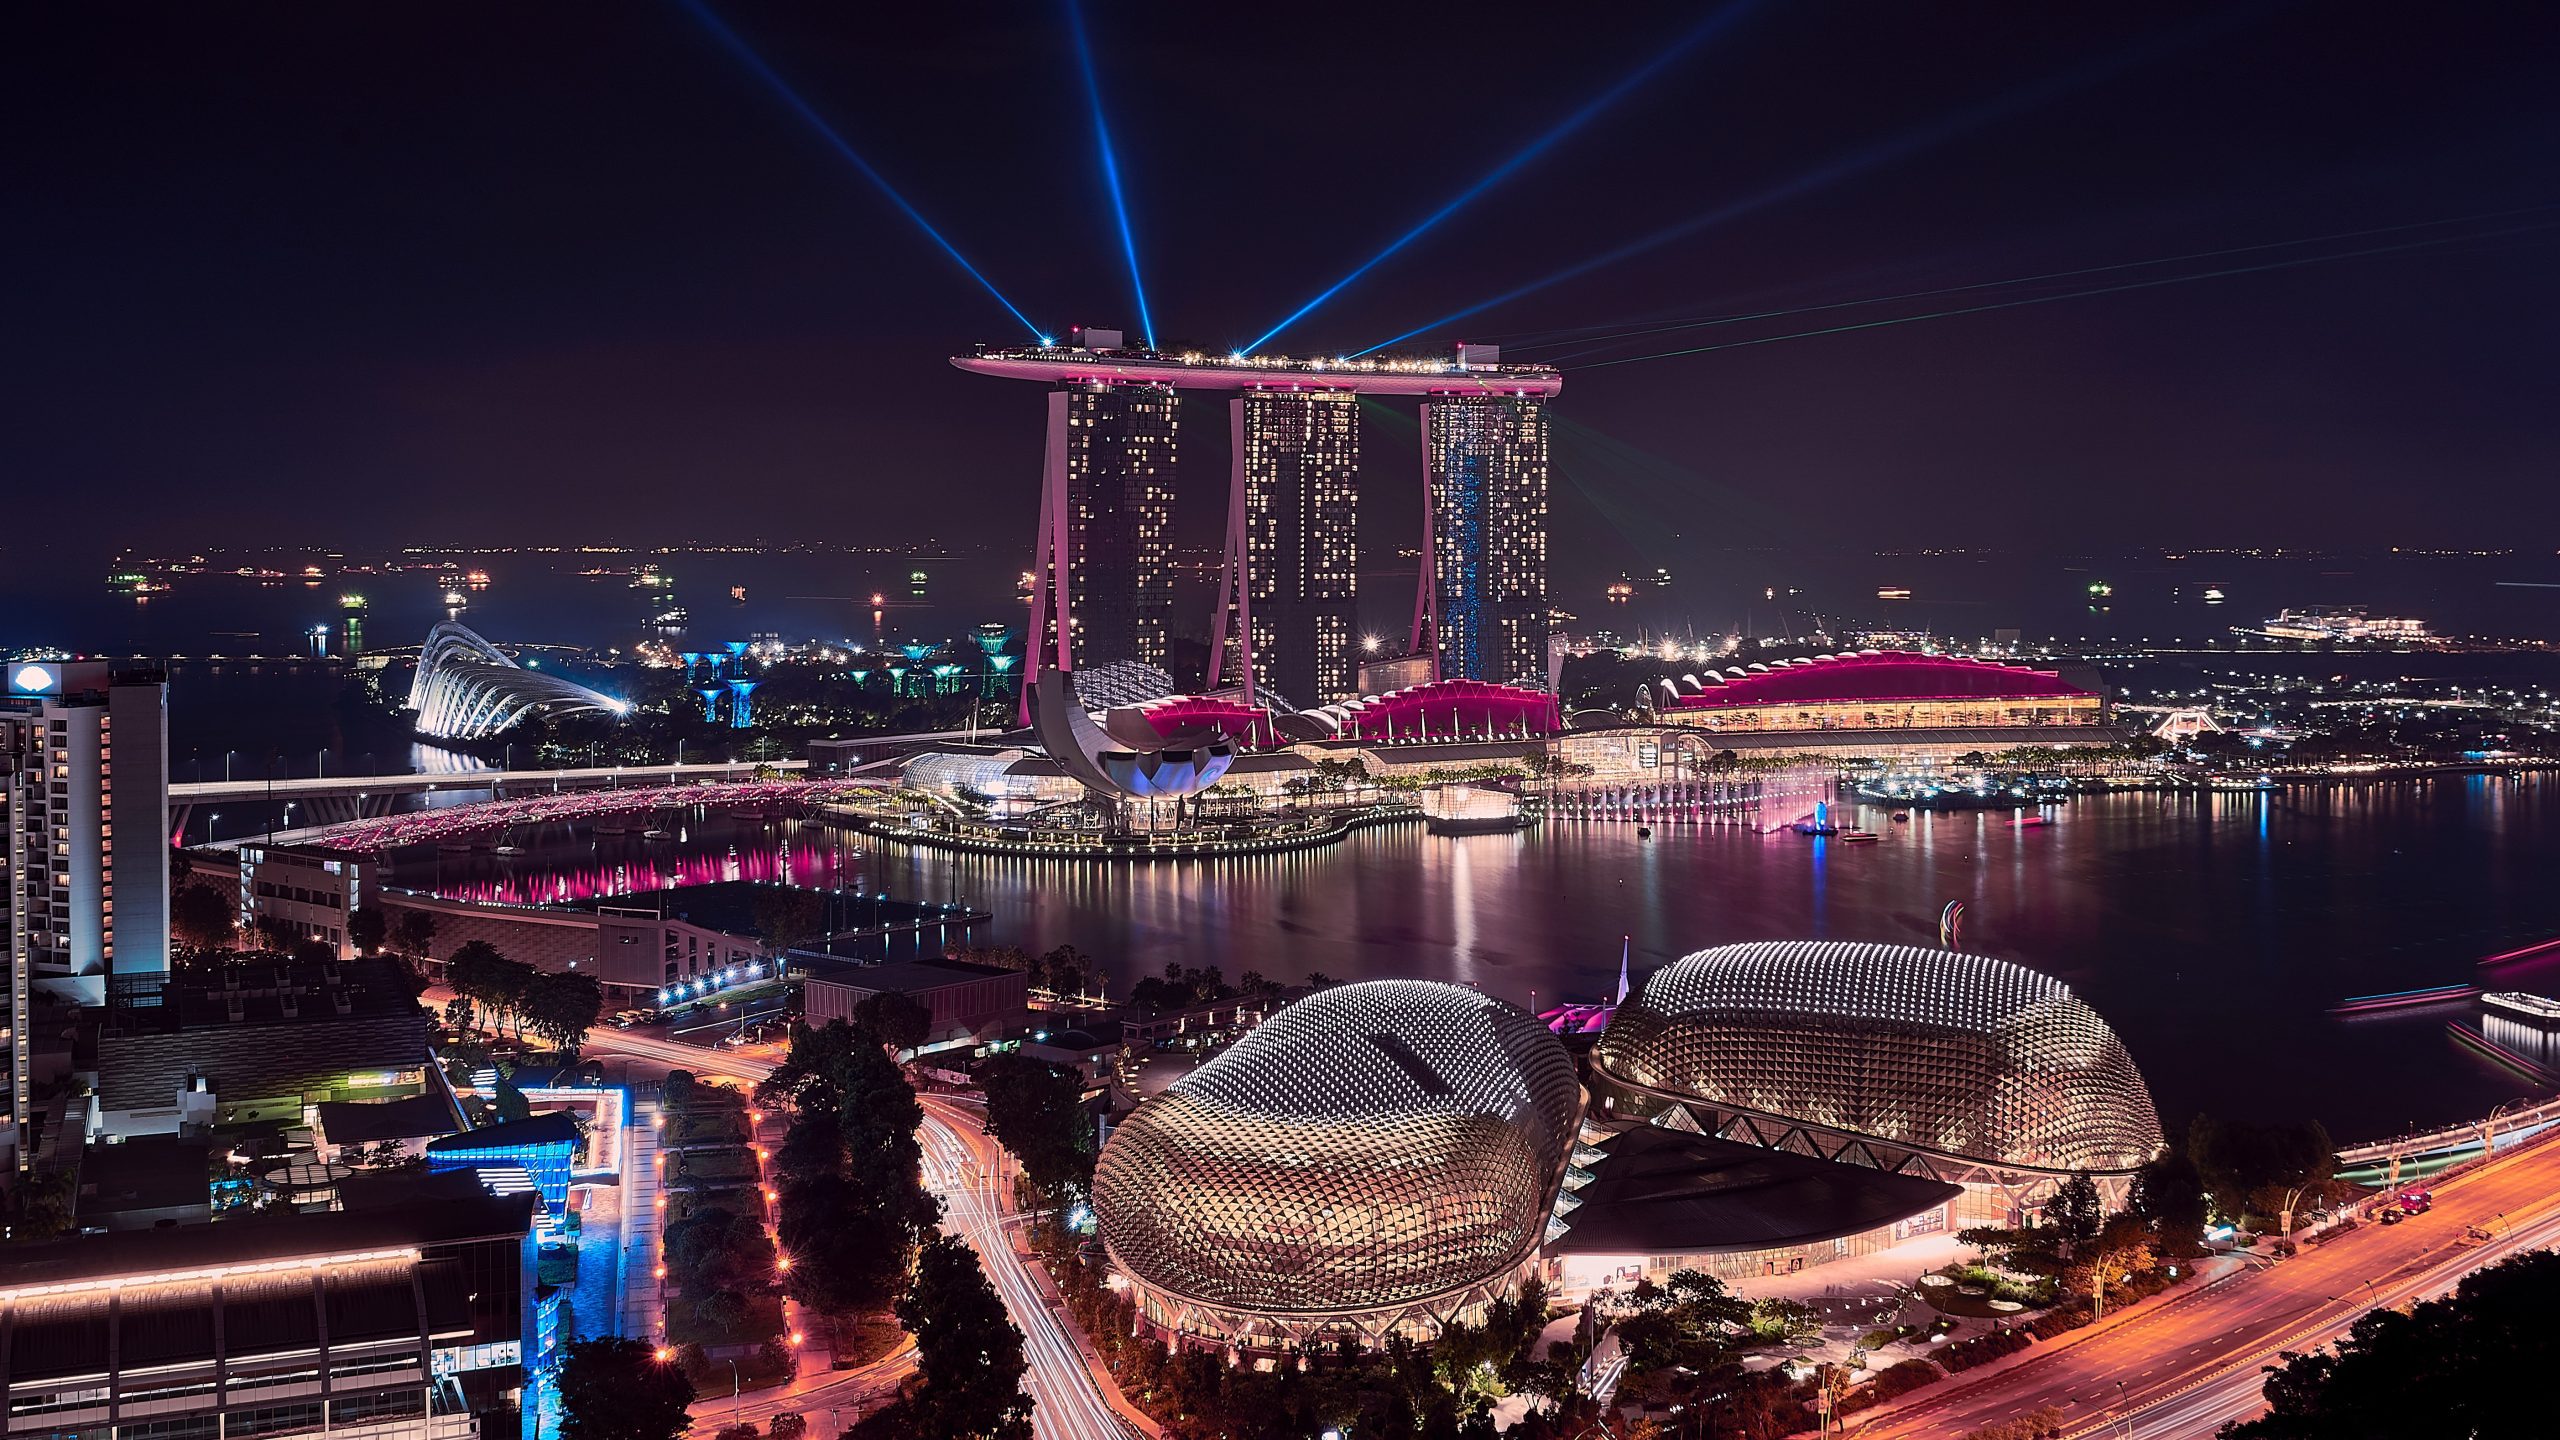 Singapore’s Marina Bay: A Glittering Hub of Entertainment and Luxury